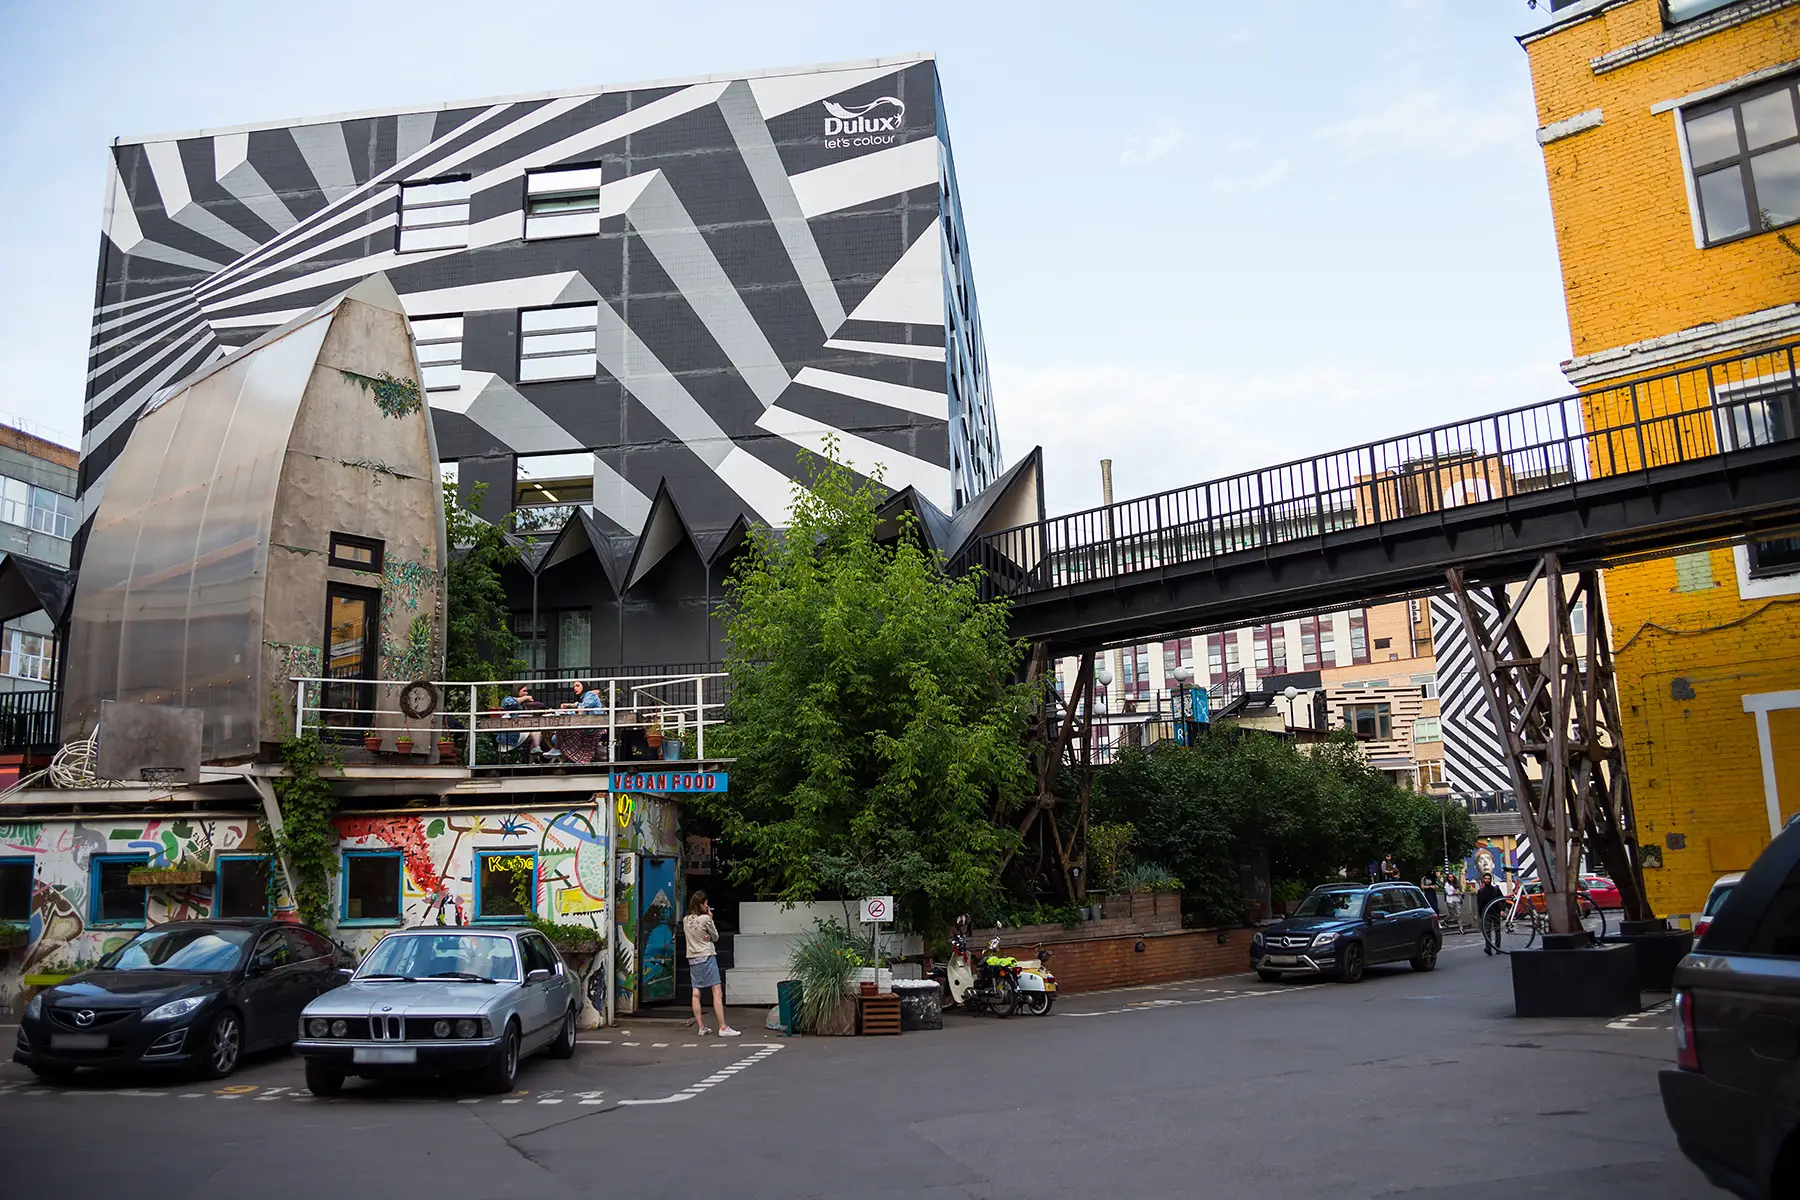 ARTPLAY design center, a black-and-white striped building with a bridge